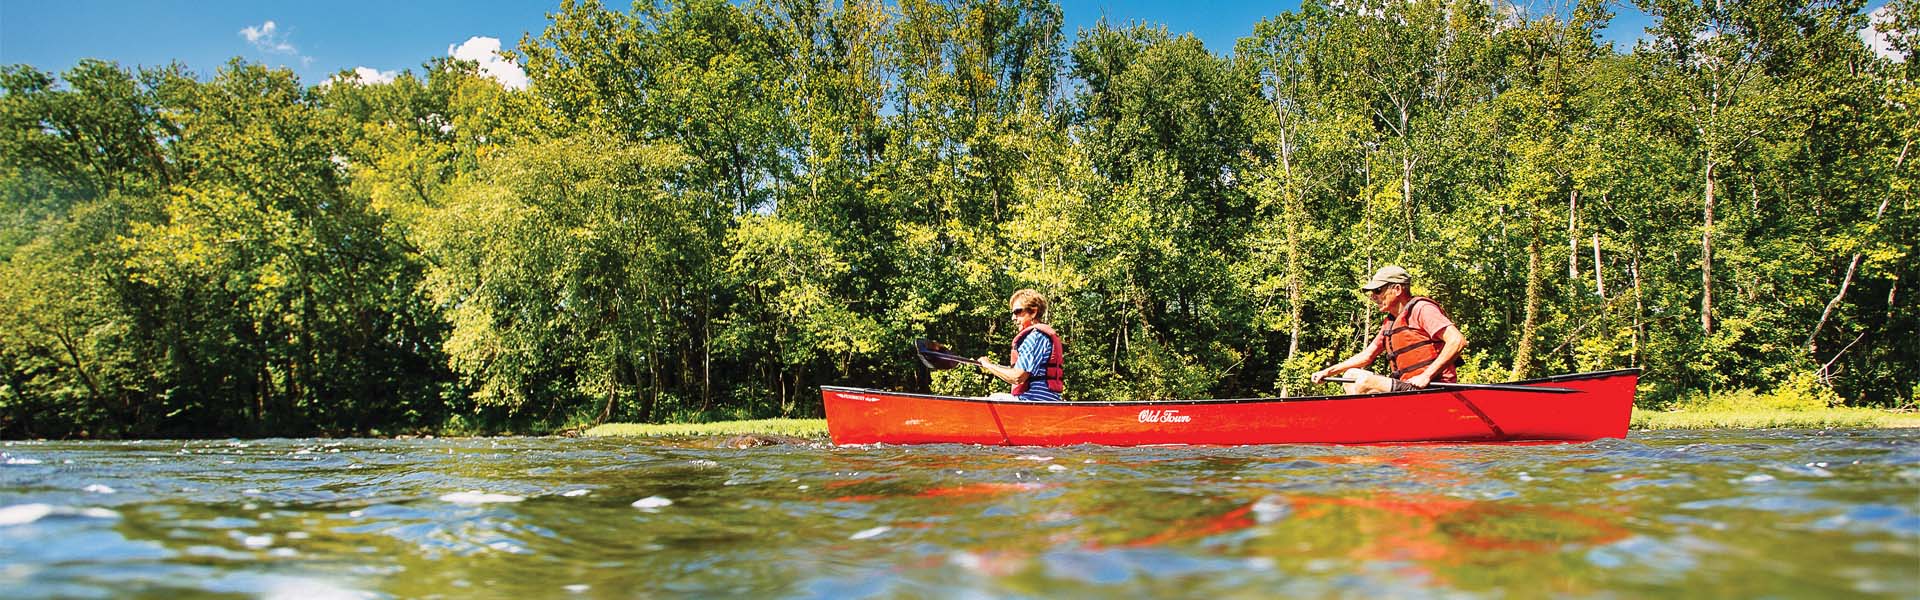 couple canoeing along Upper James River